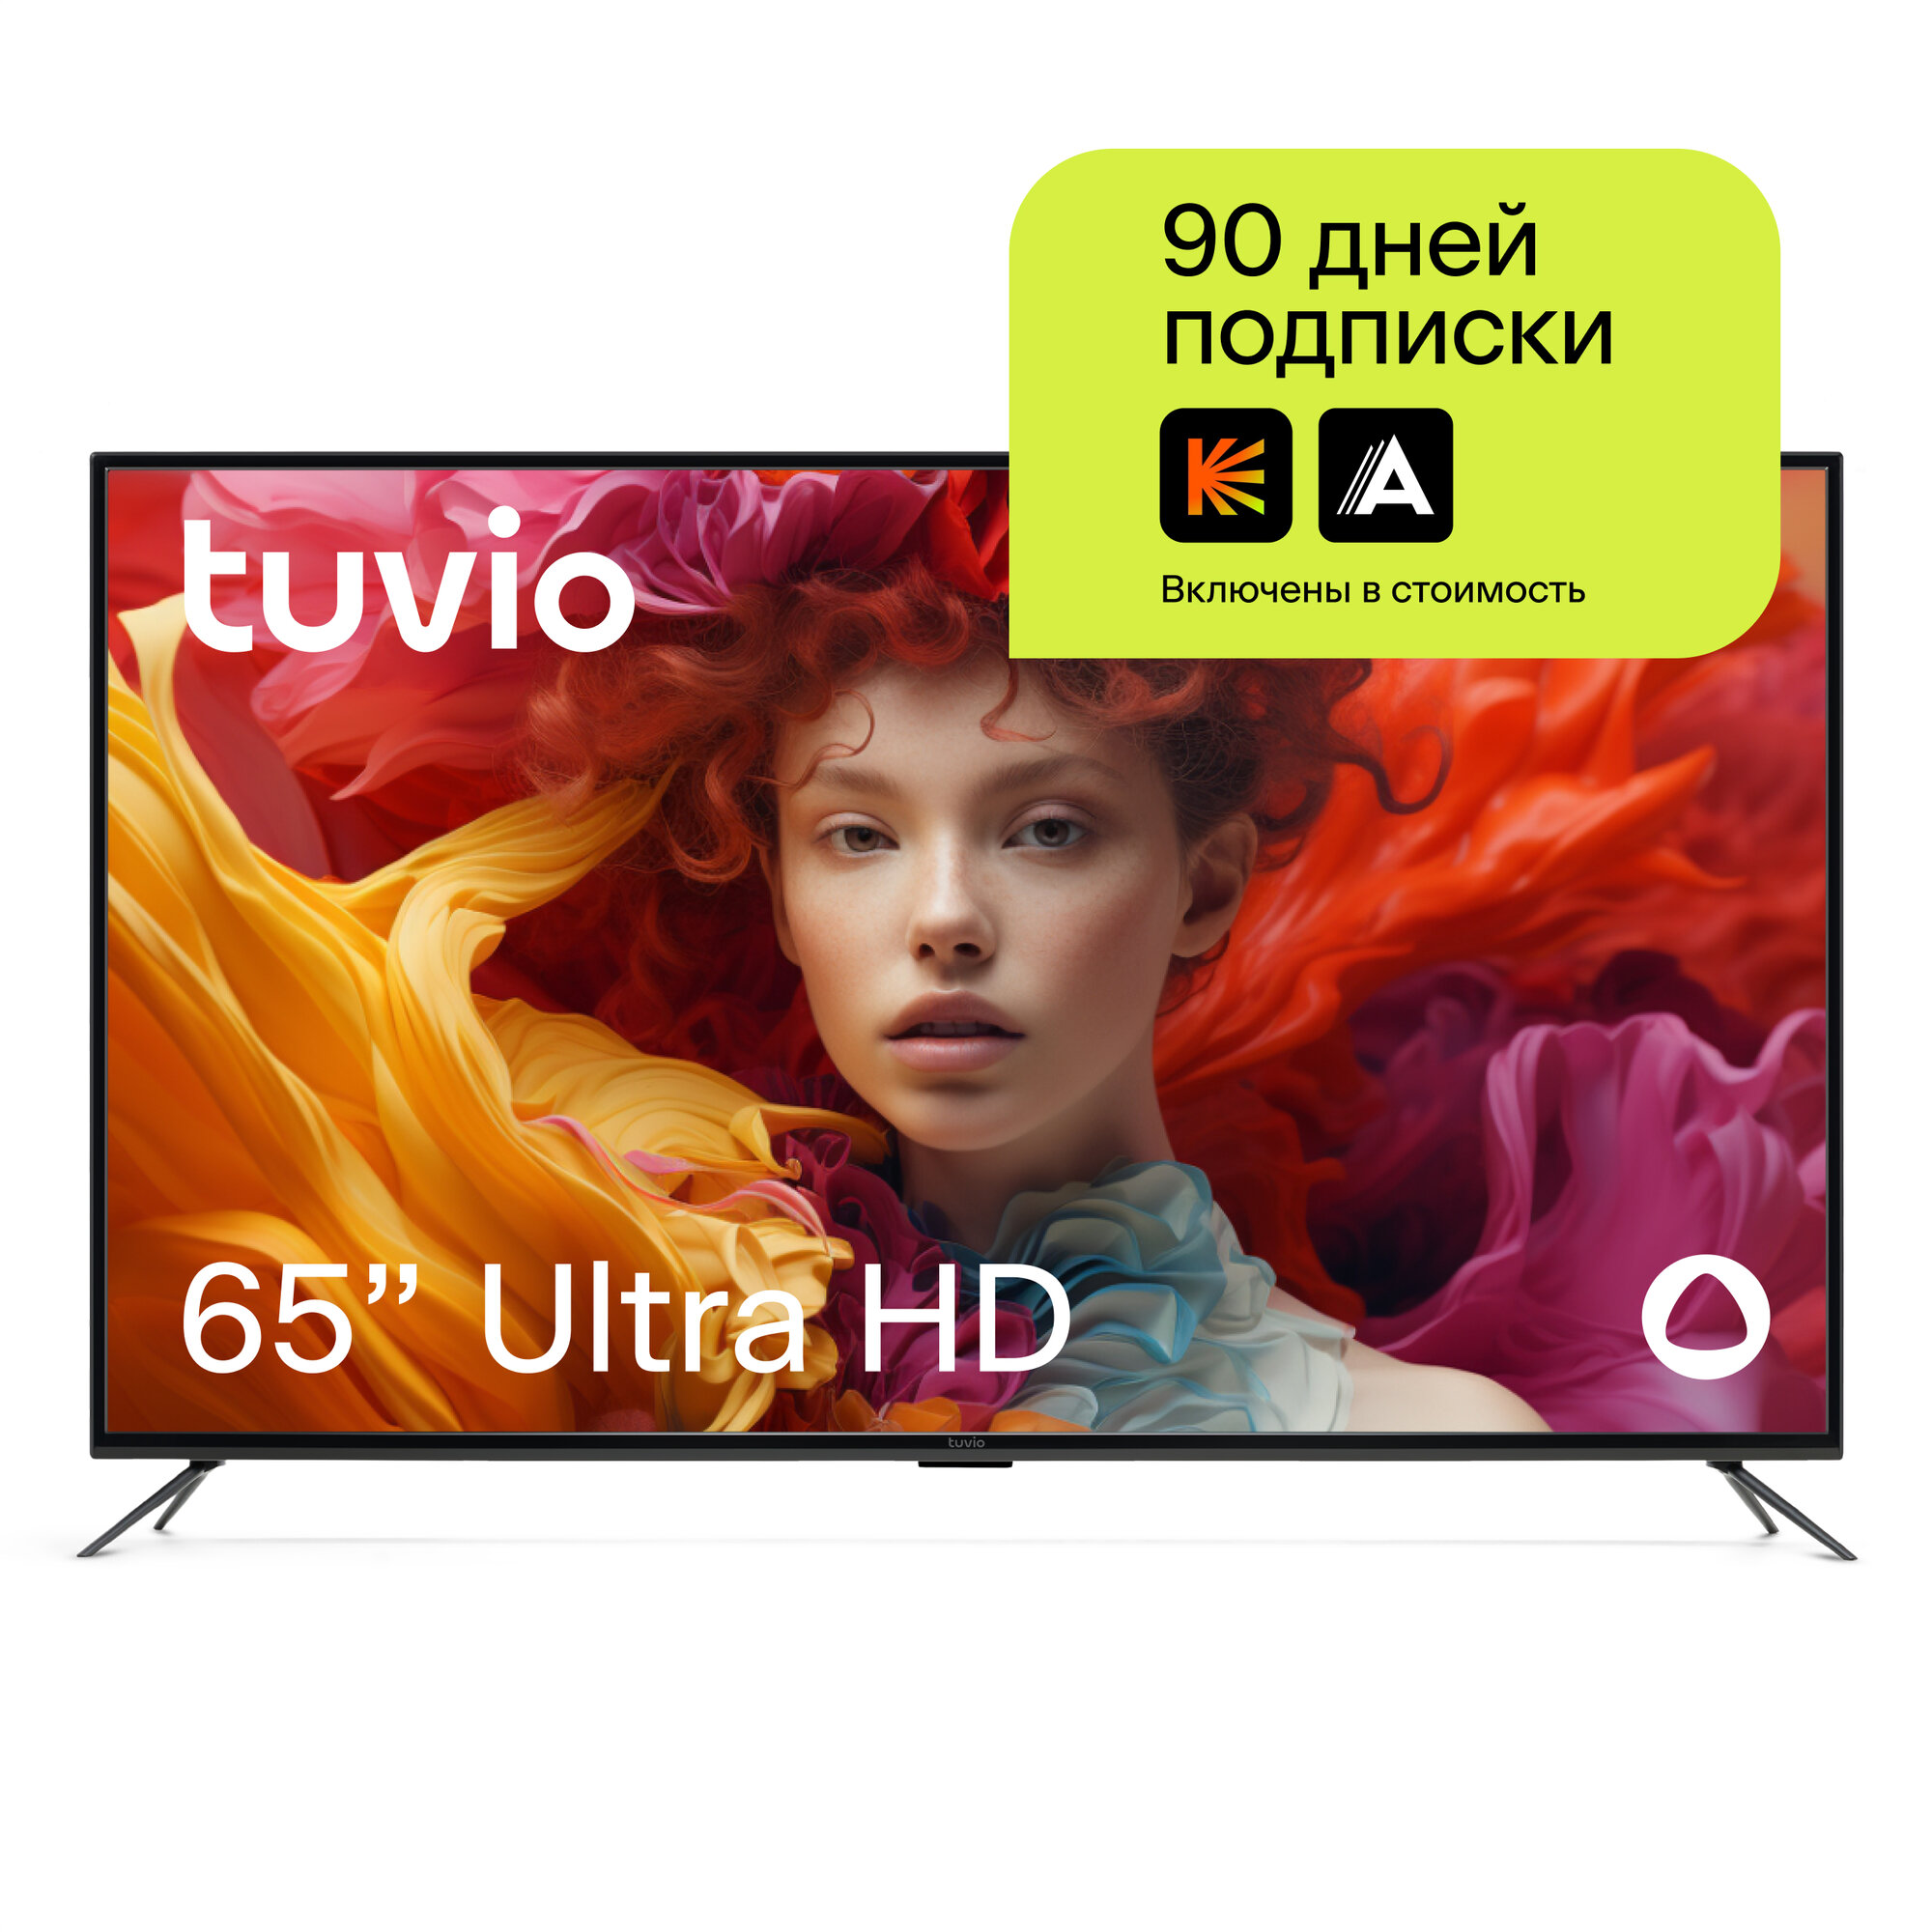 65” Телевизор Tuvio 4K ULTRA HD DLED на платформе Яндекс.ТВ STV-65DUBK1R черный